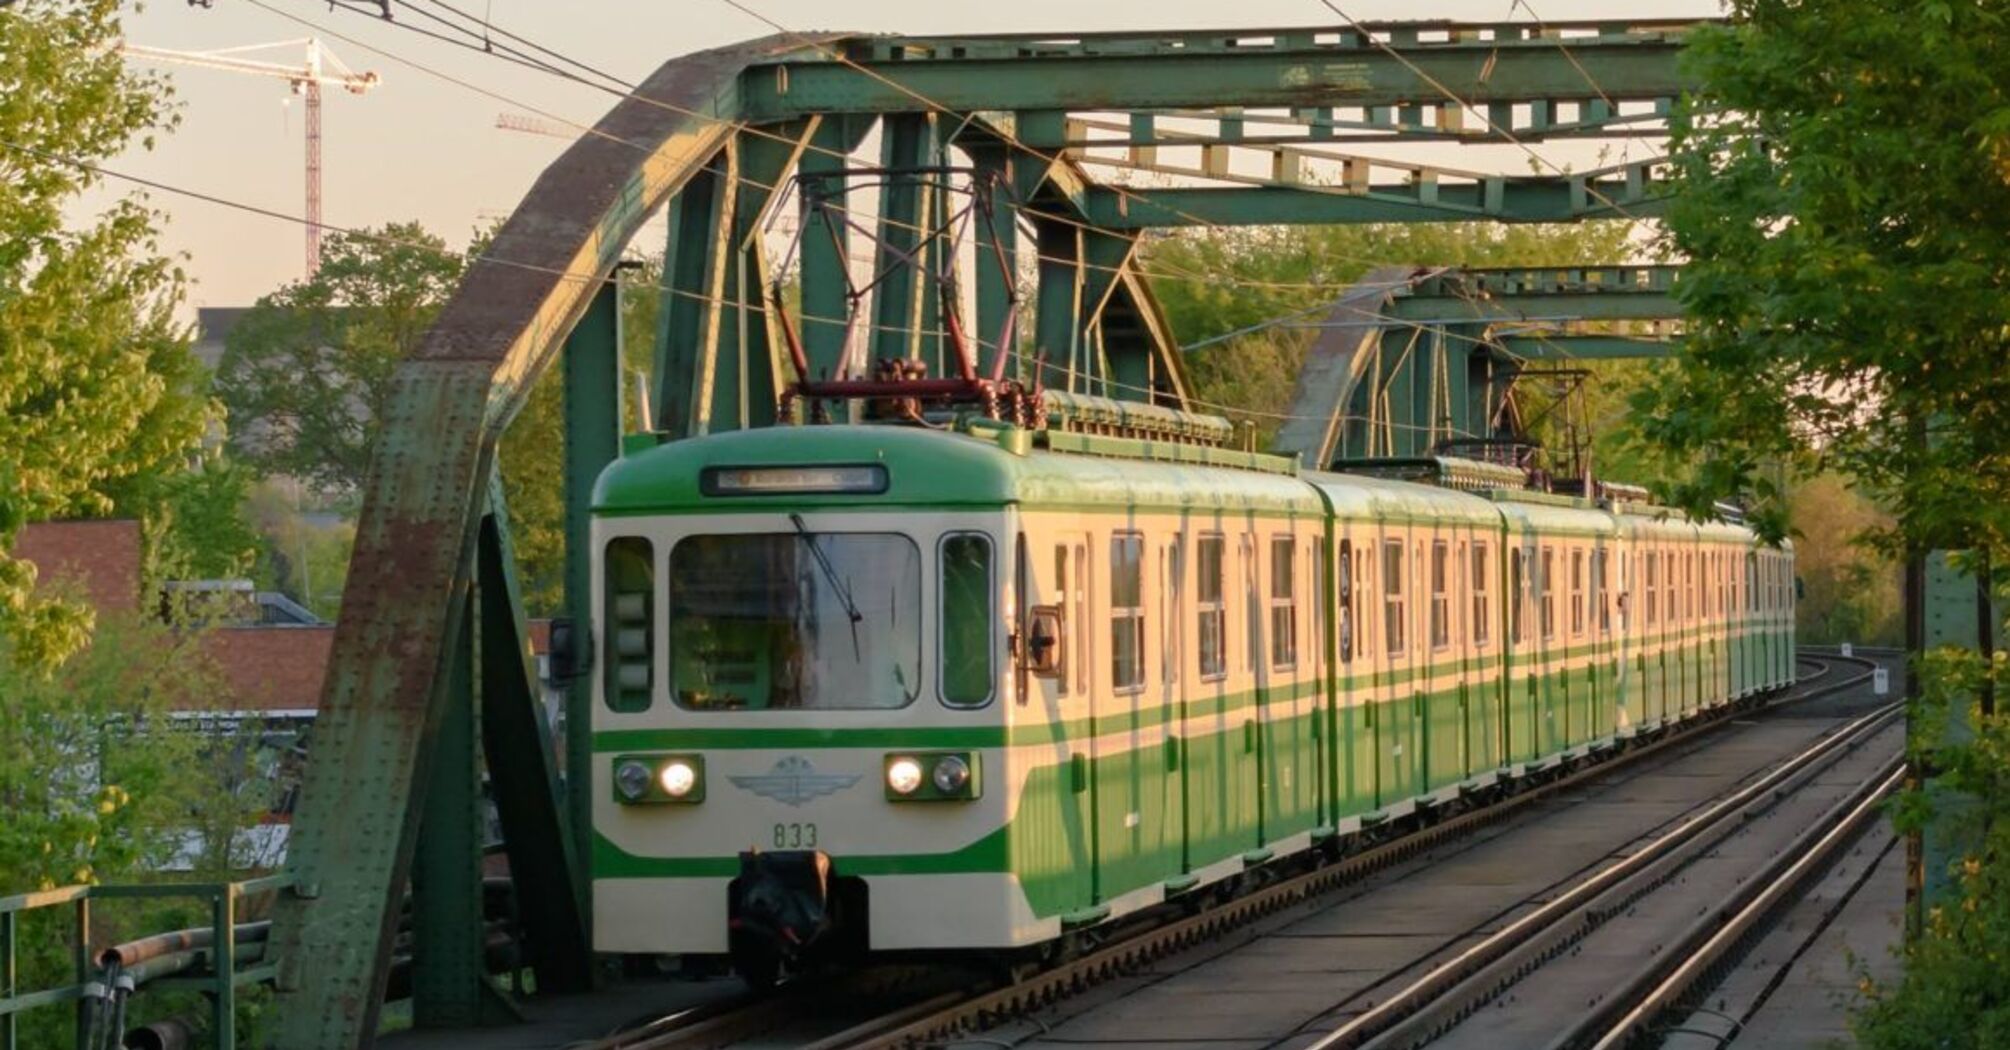 Public transportation in Budapest